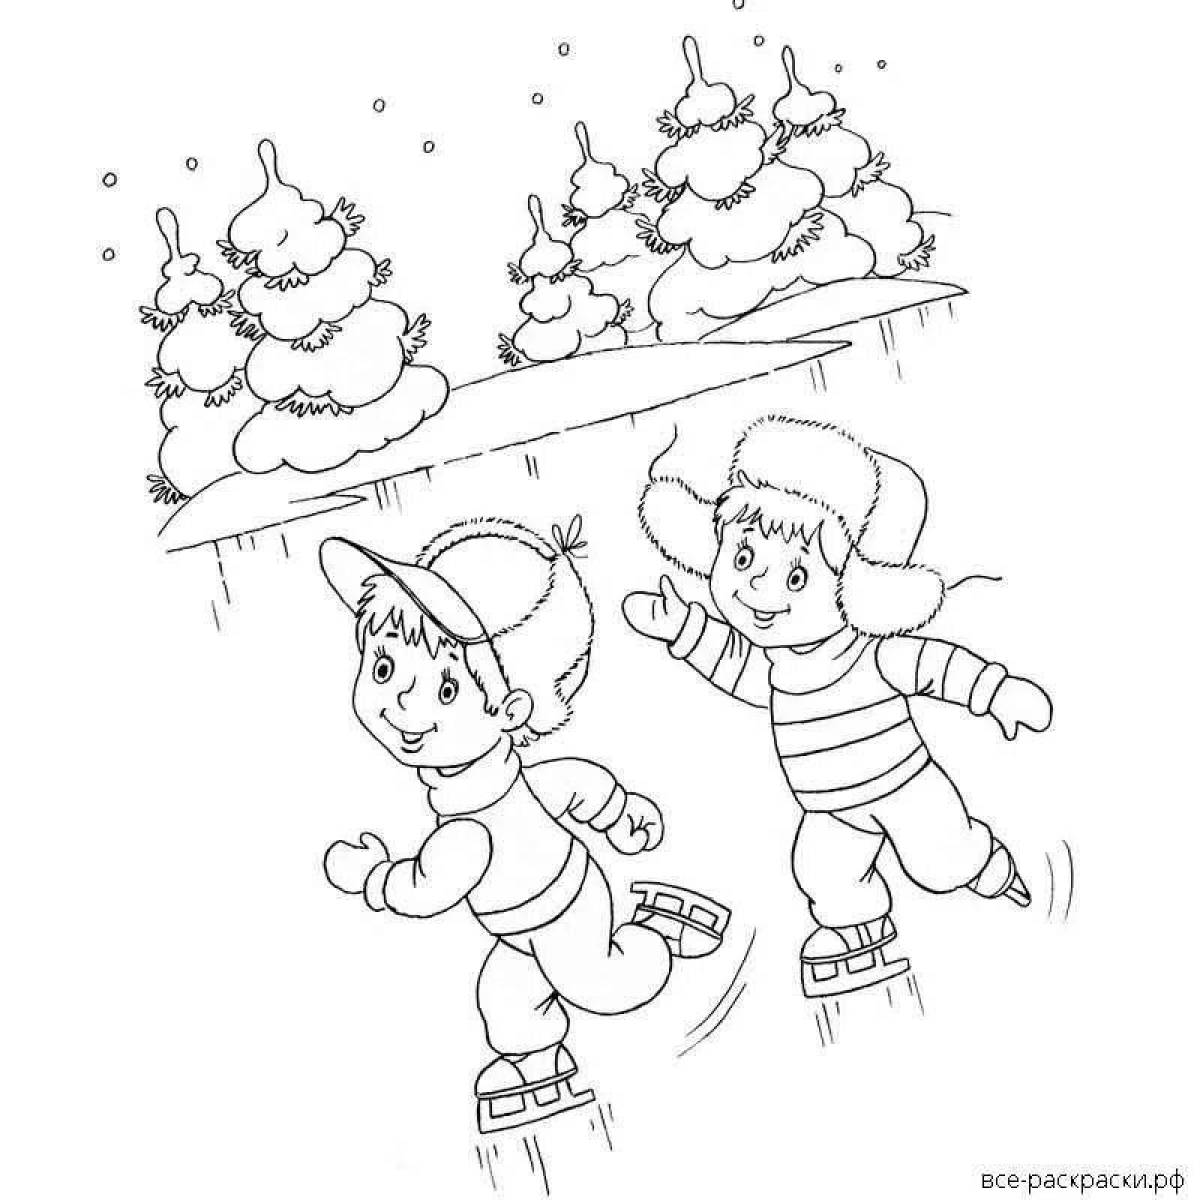 Great coloring drawing of winter fun